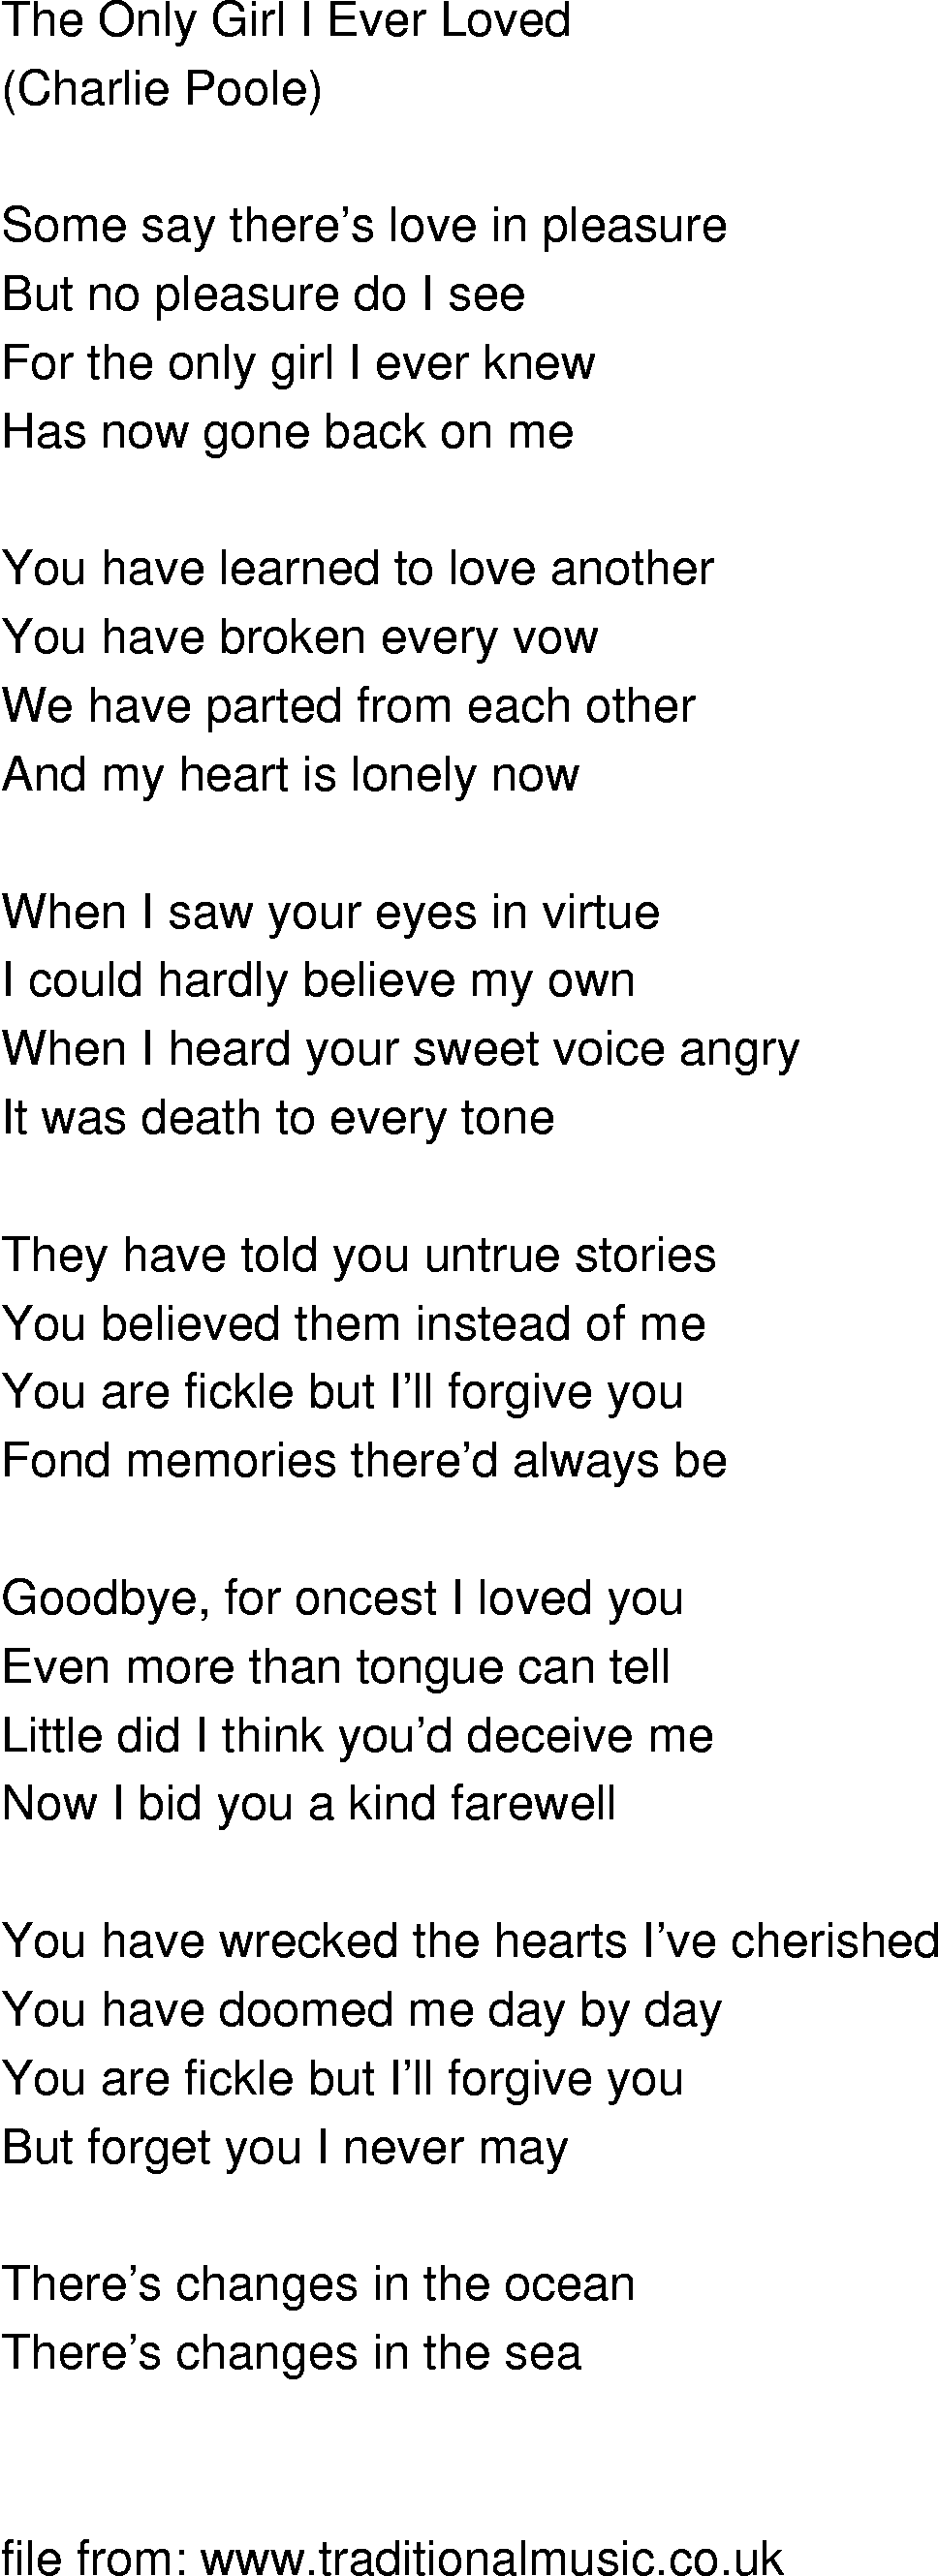 Old-Time (oldtimey) Song Lyrics - the only girl i ever lovedt